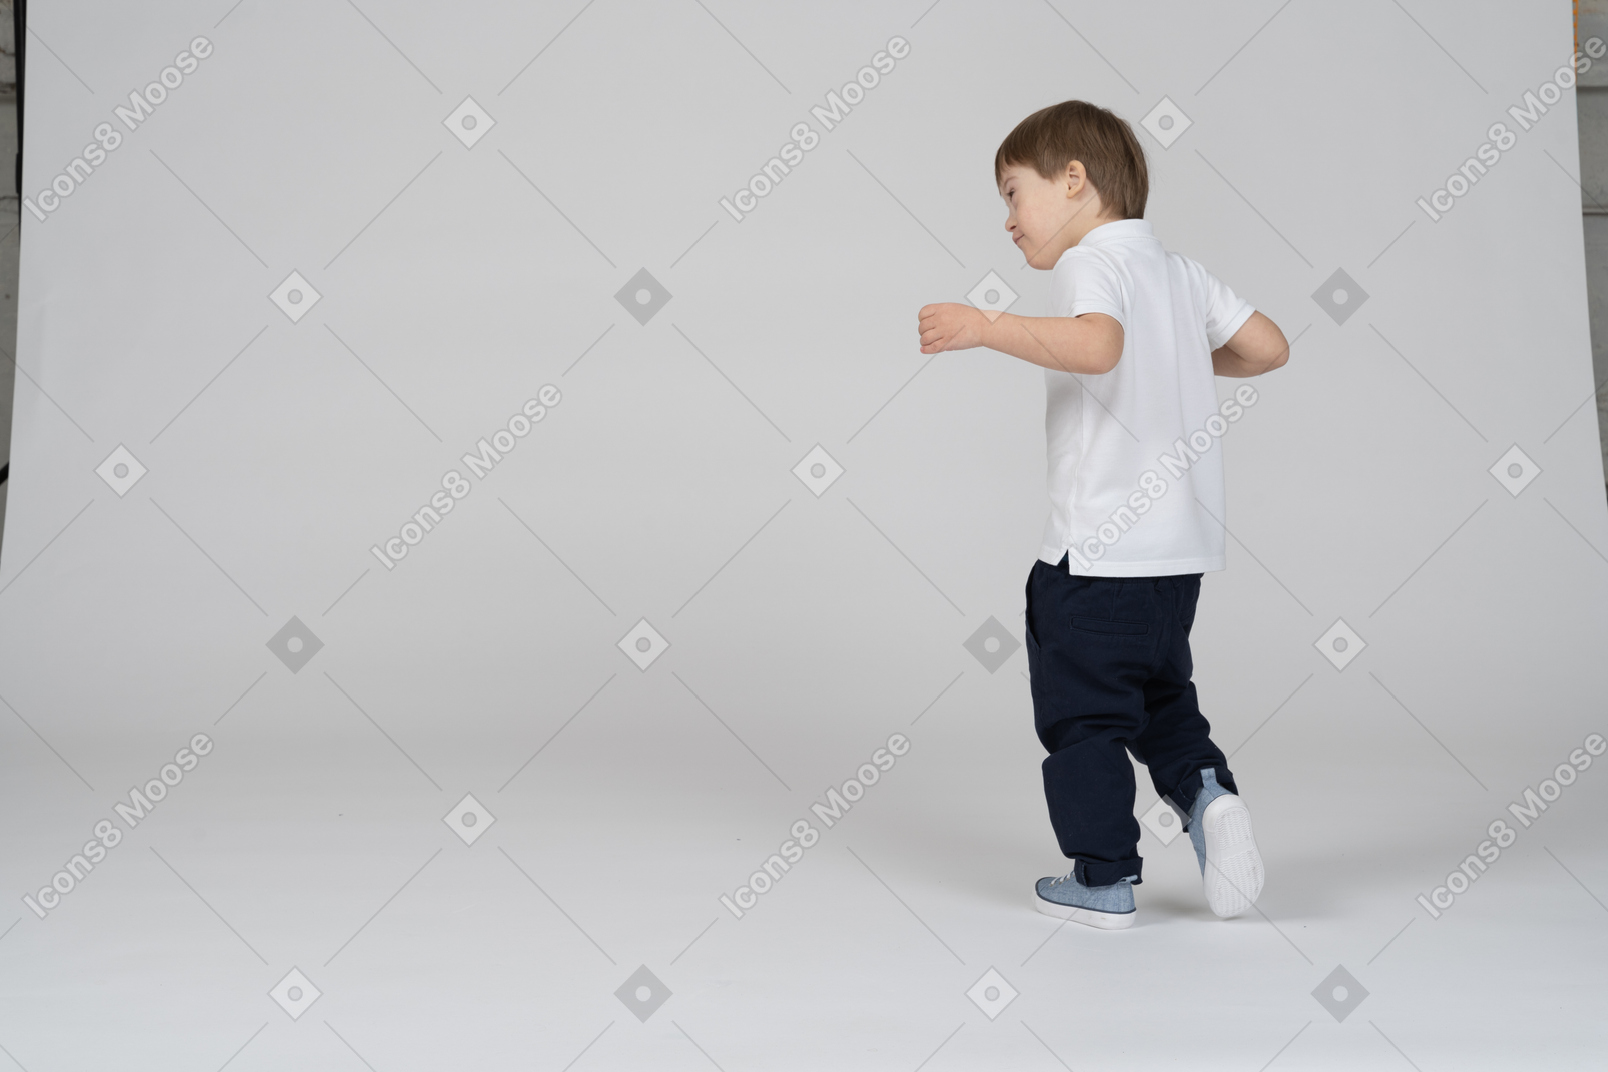 Vista trasera de tres cuartos de un niño que da un paso adelante con las manos levantadas ligeramente